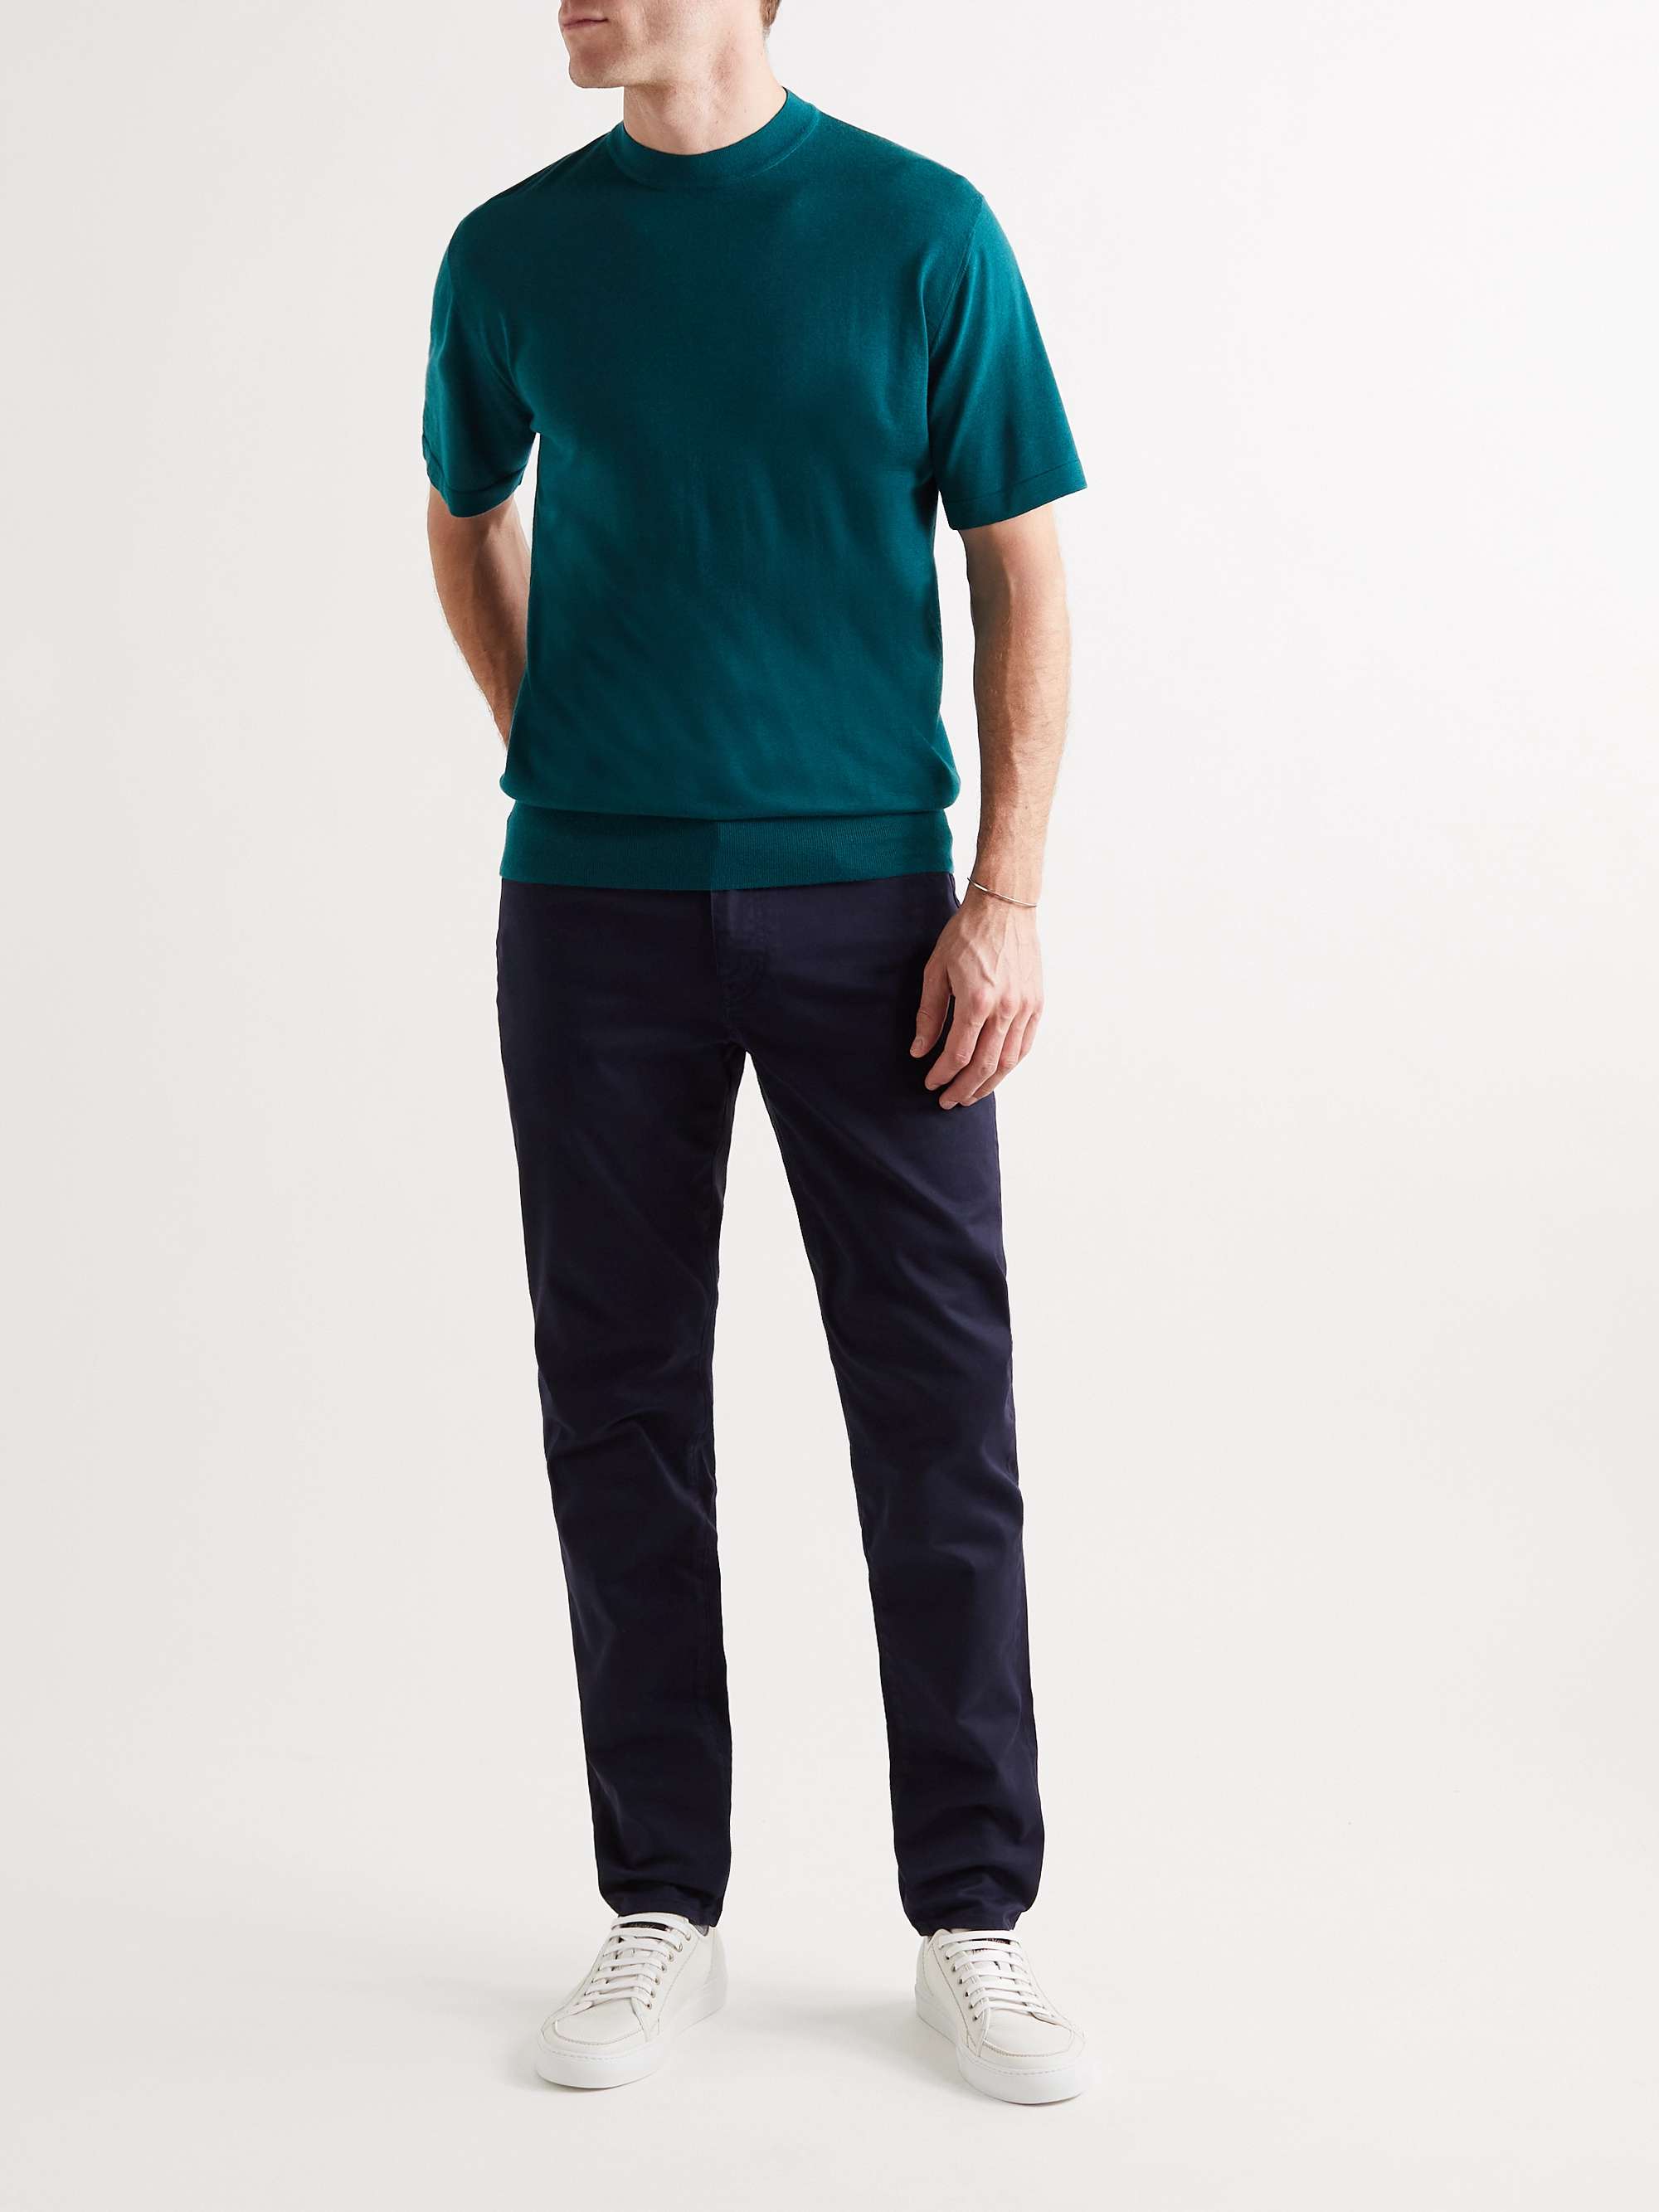 Teal Cashmere and Silk-Blend T-Shirt | LORO PIANA | MR PORTER